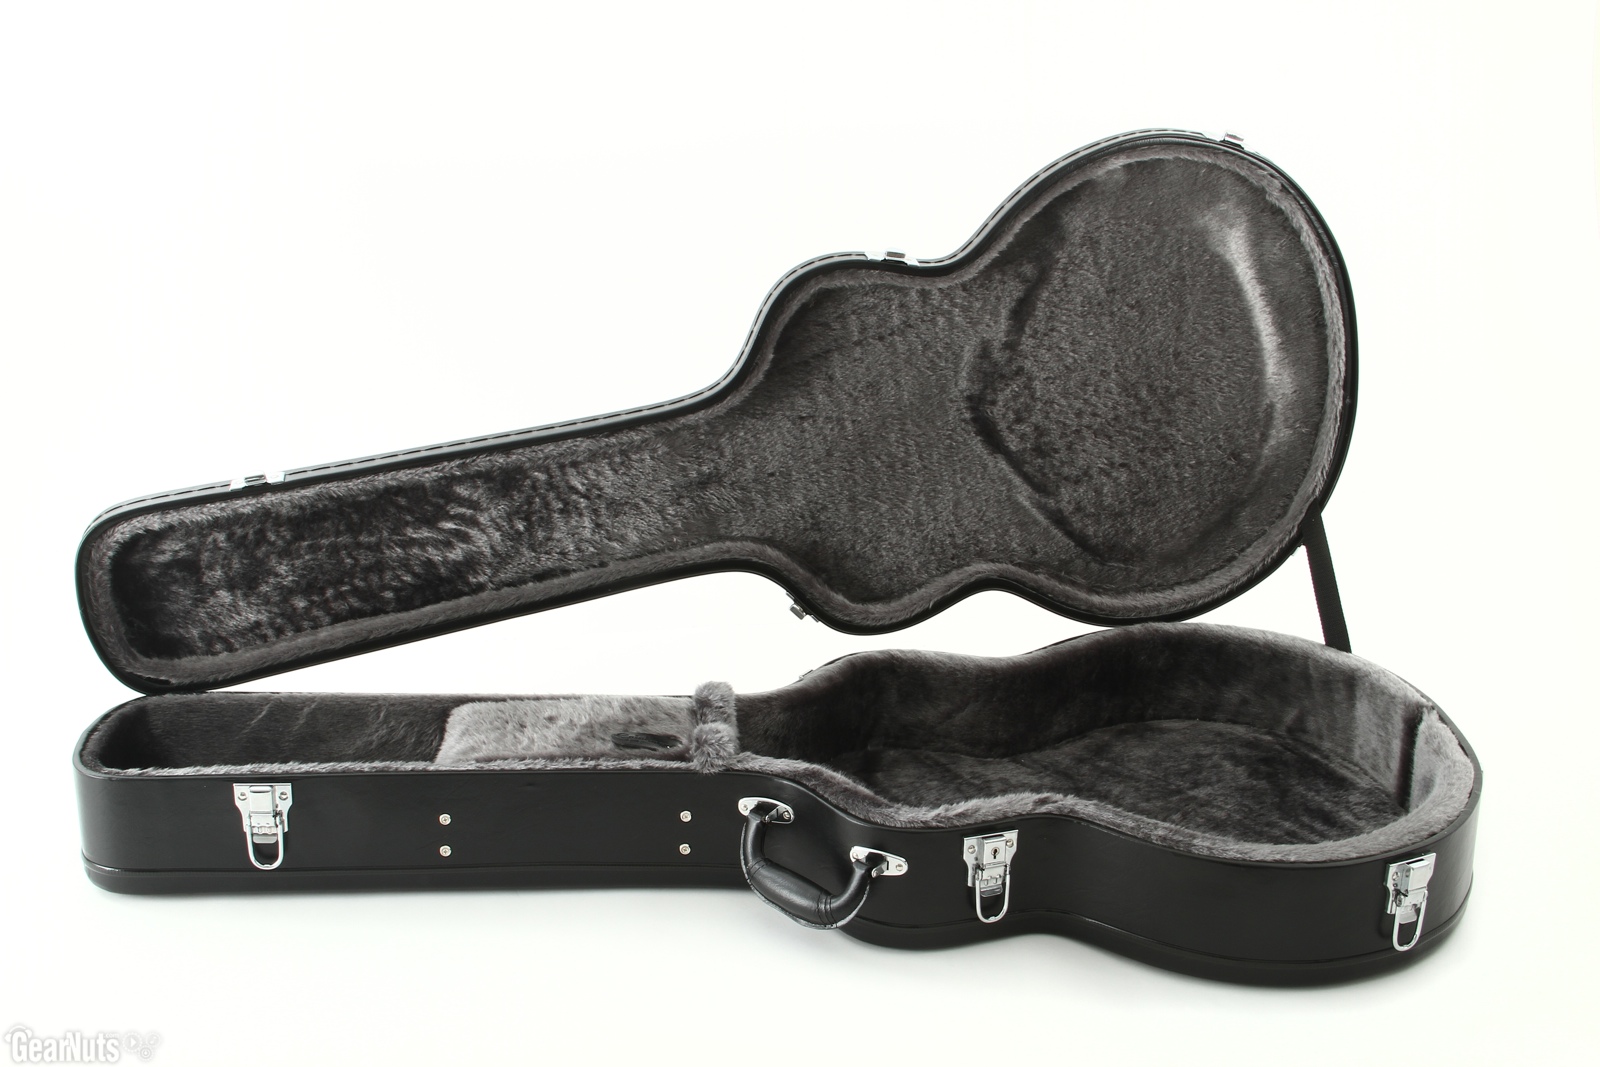 Epiphone E339 Es-339 Hard Case - Electric guitar case - Variation 1